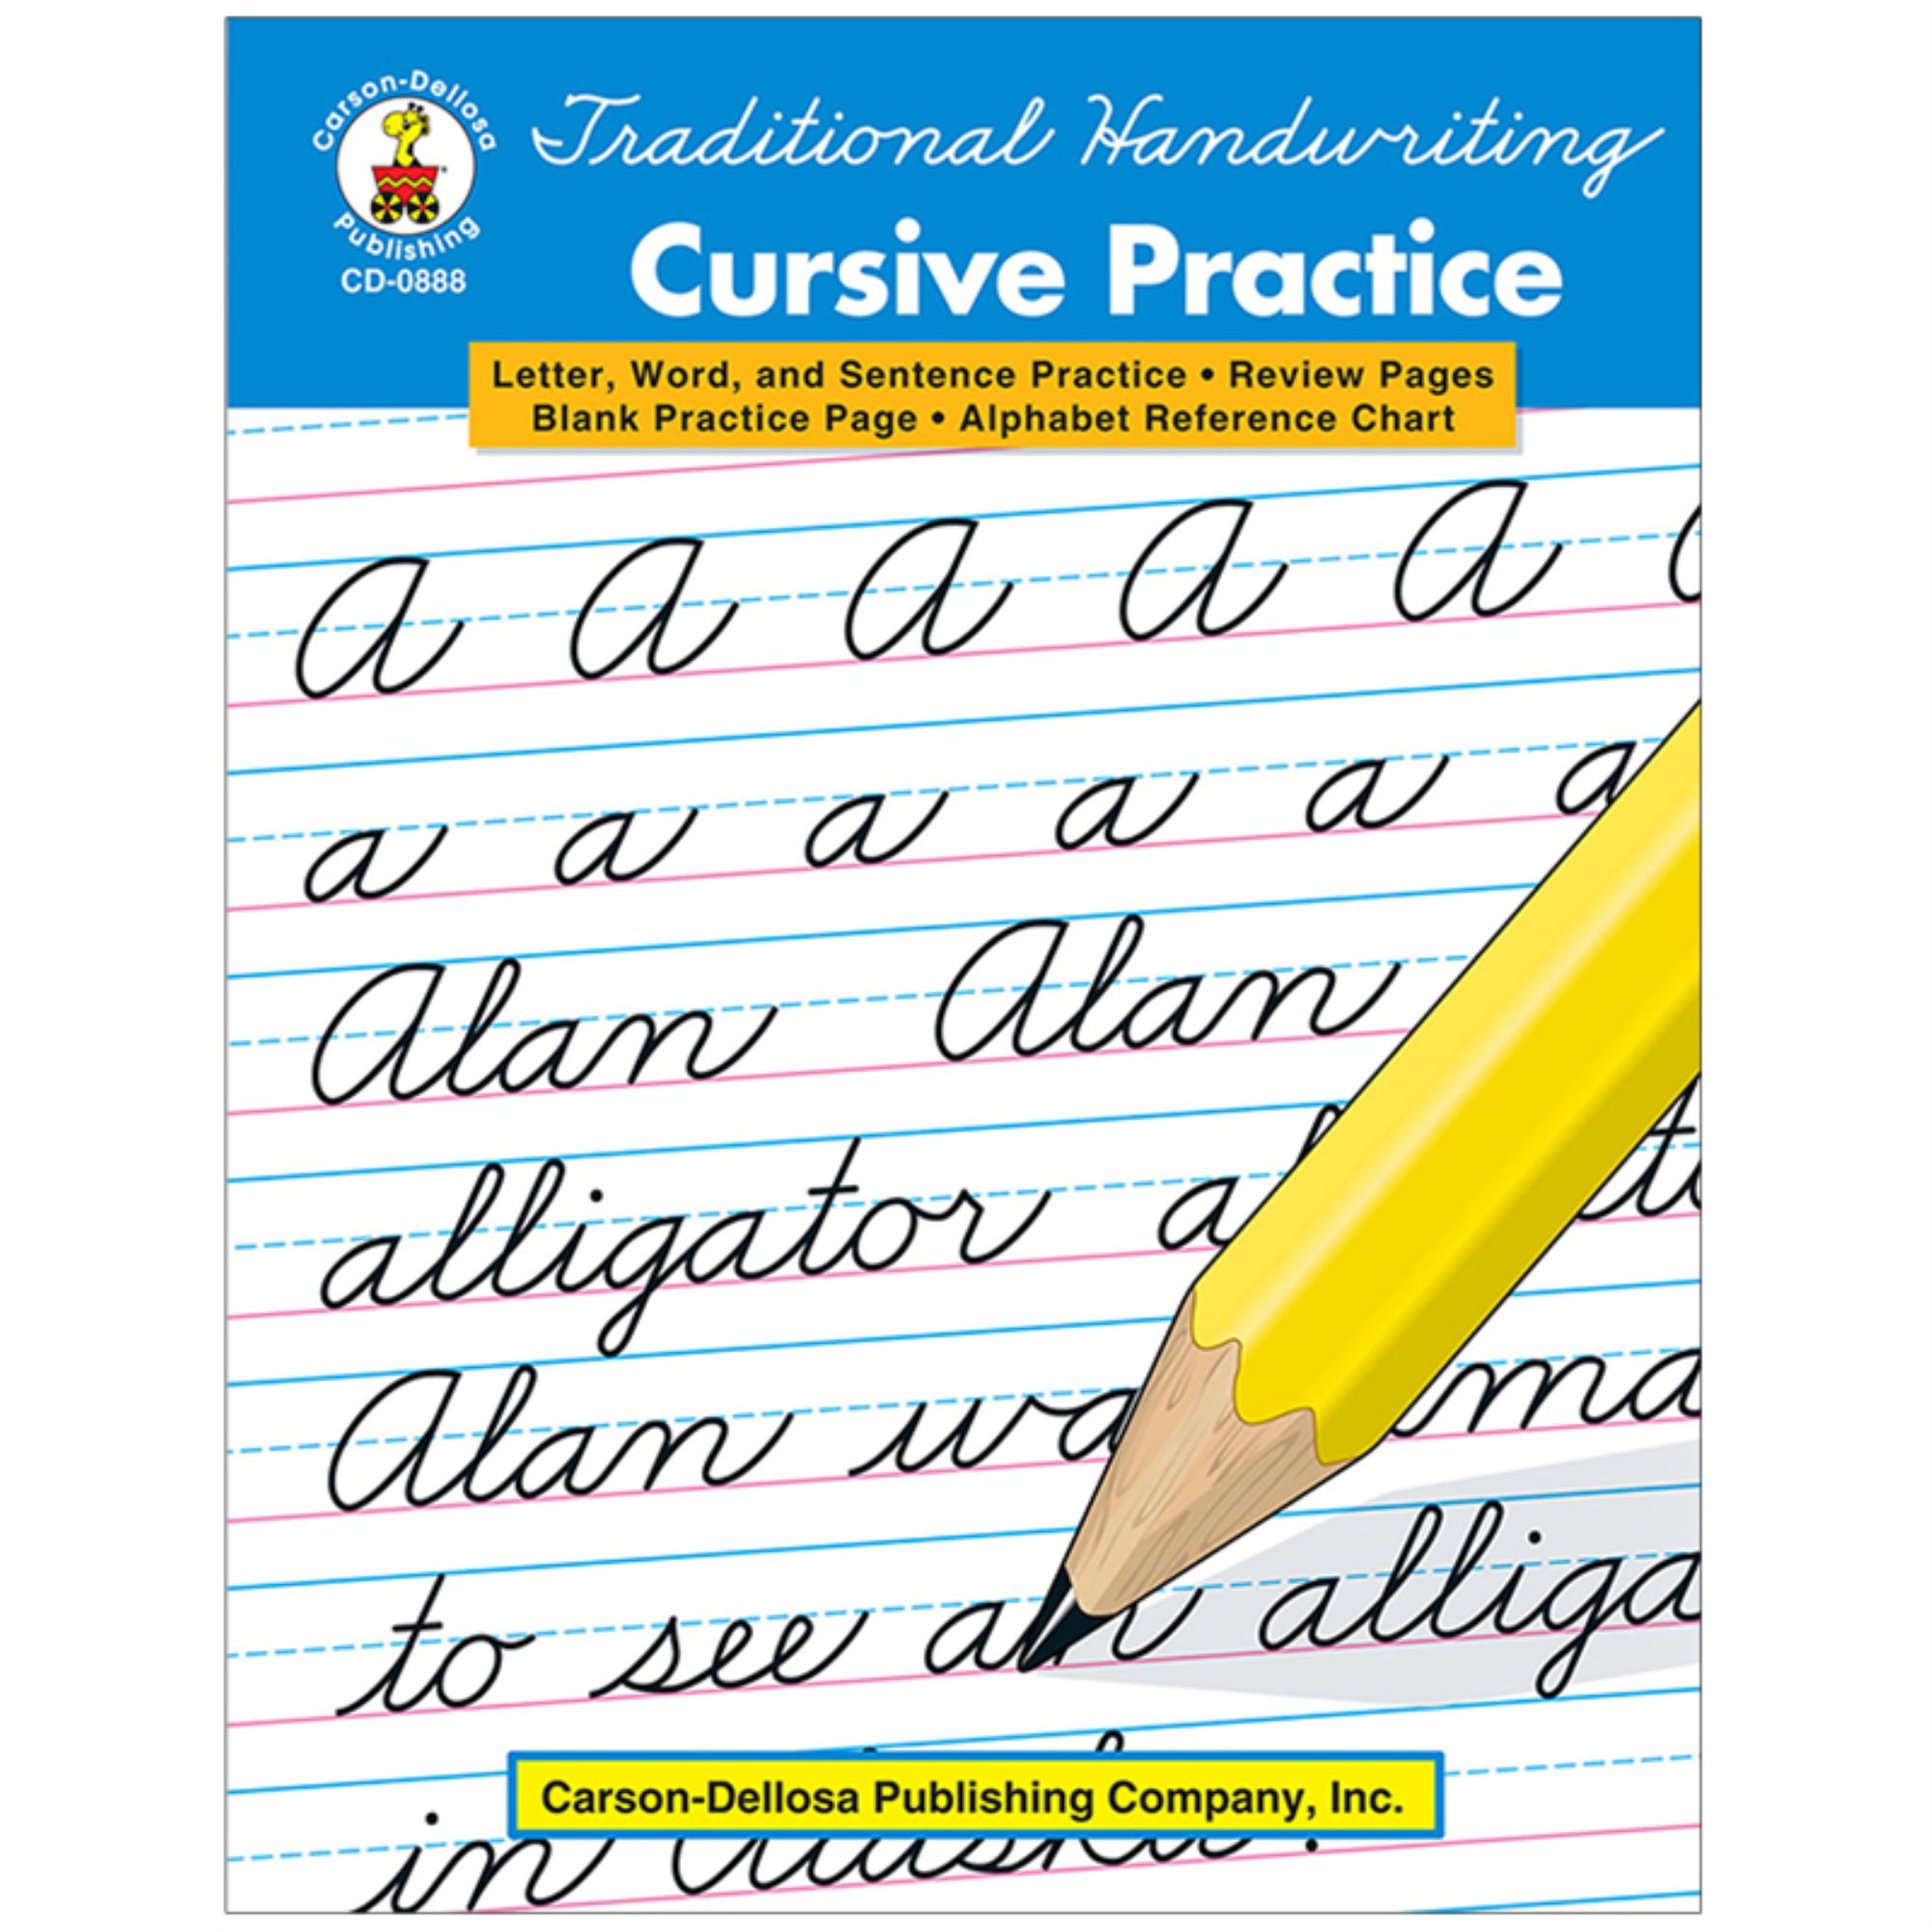 Grooved cursive handwriting book practice